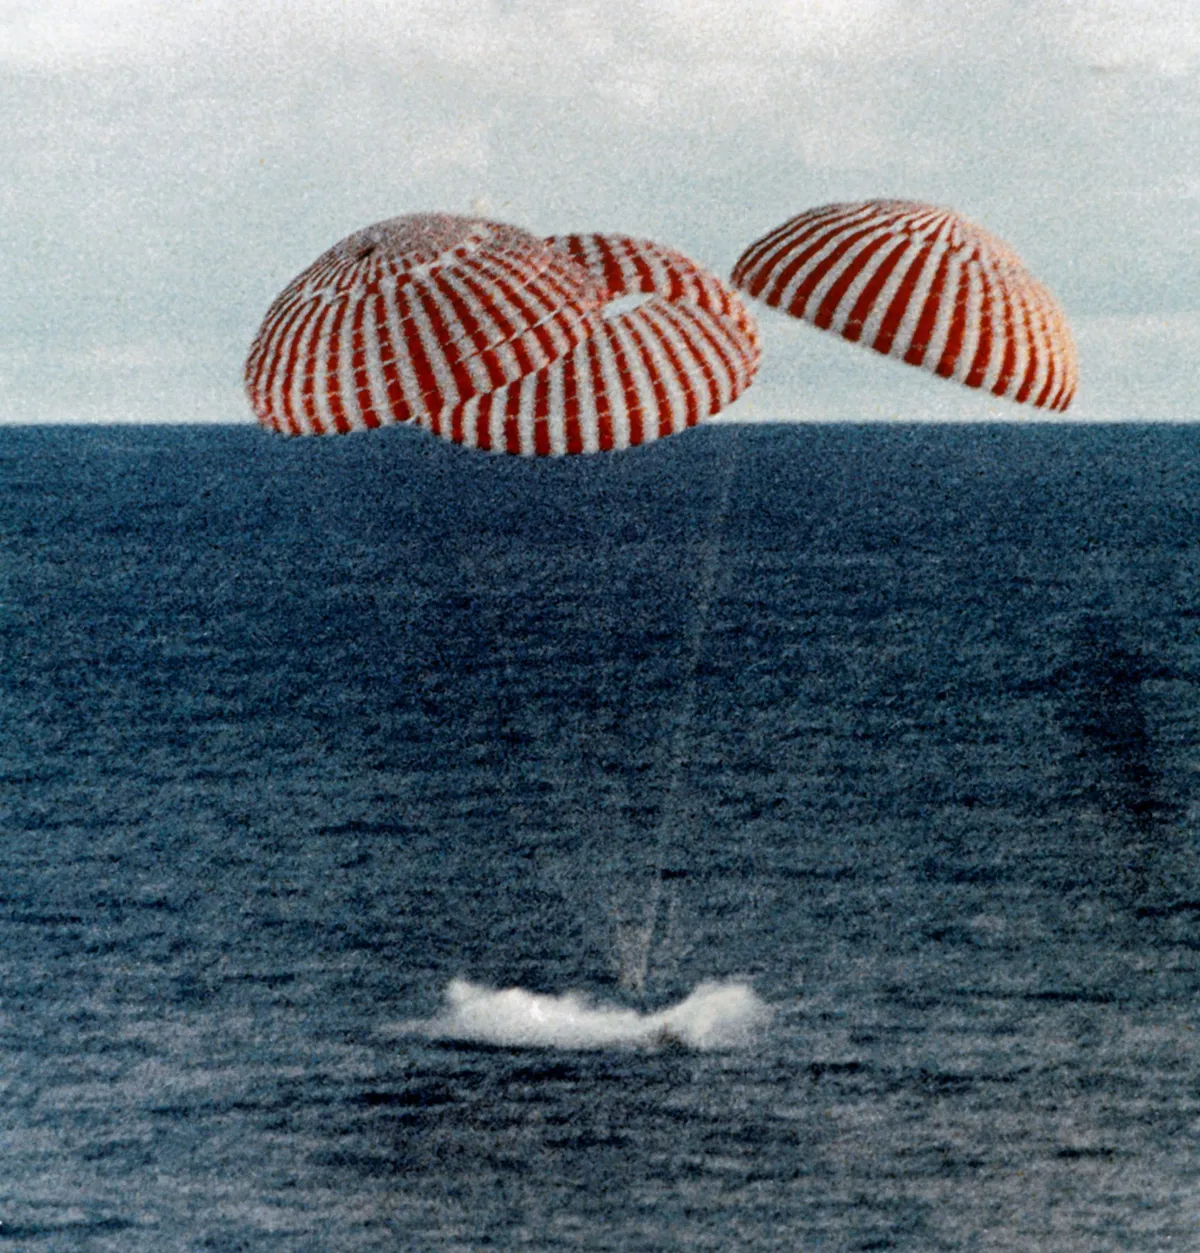 The crew of Apollo 13 splashdown. Credit: NASA